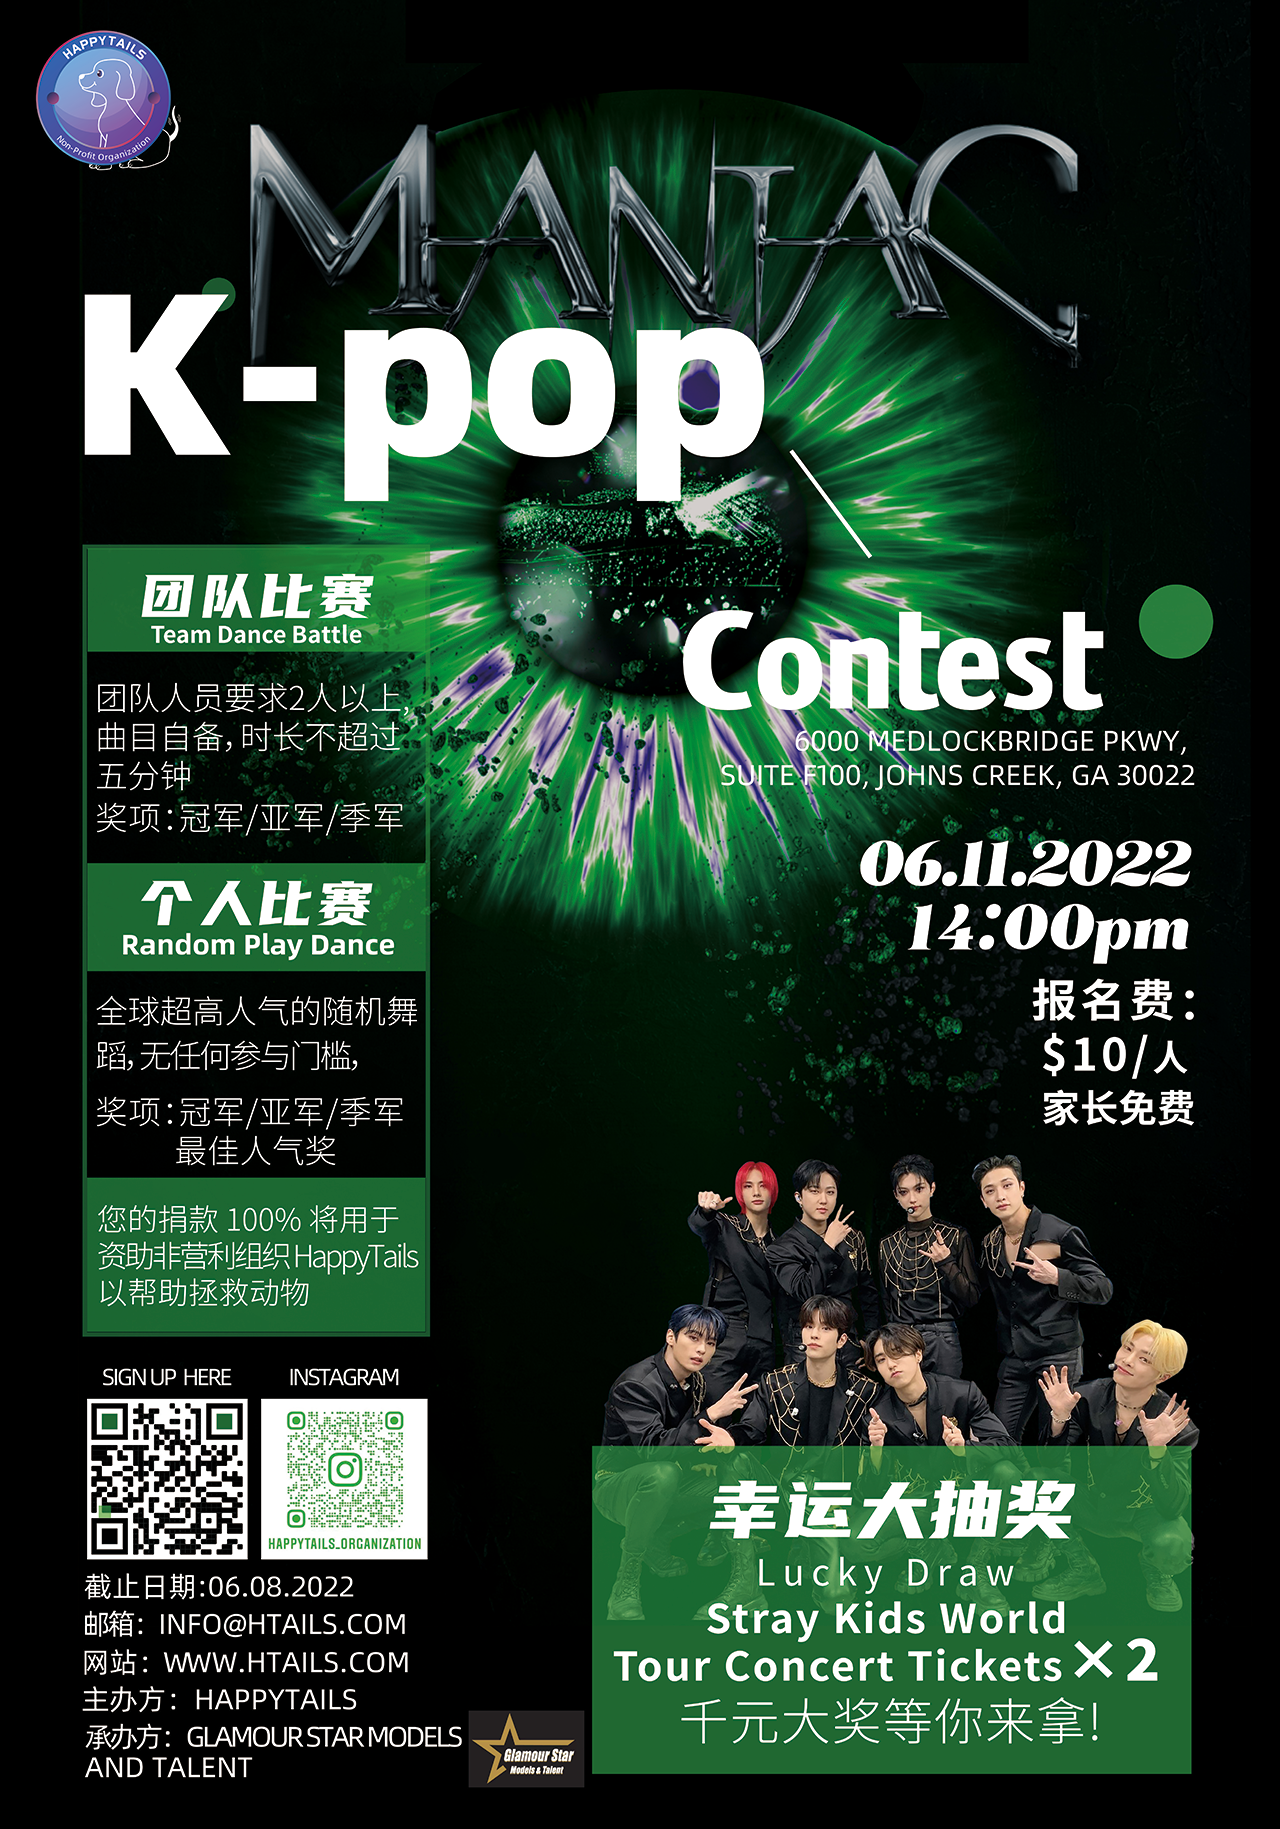 MANIAC K-pop Contest- 2022 MANIAC 多元音乐舞蹈大赛